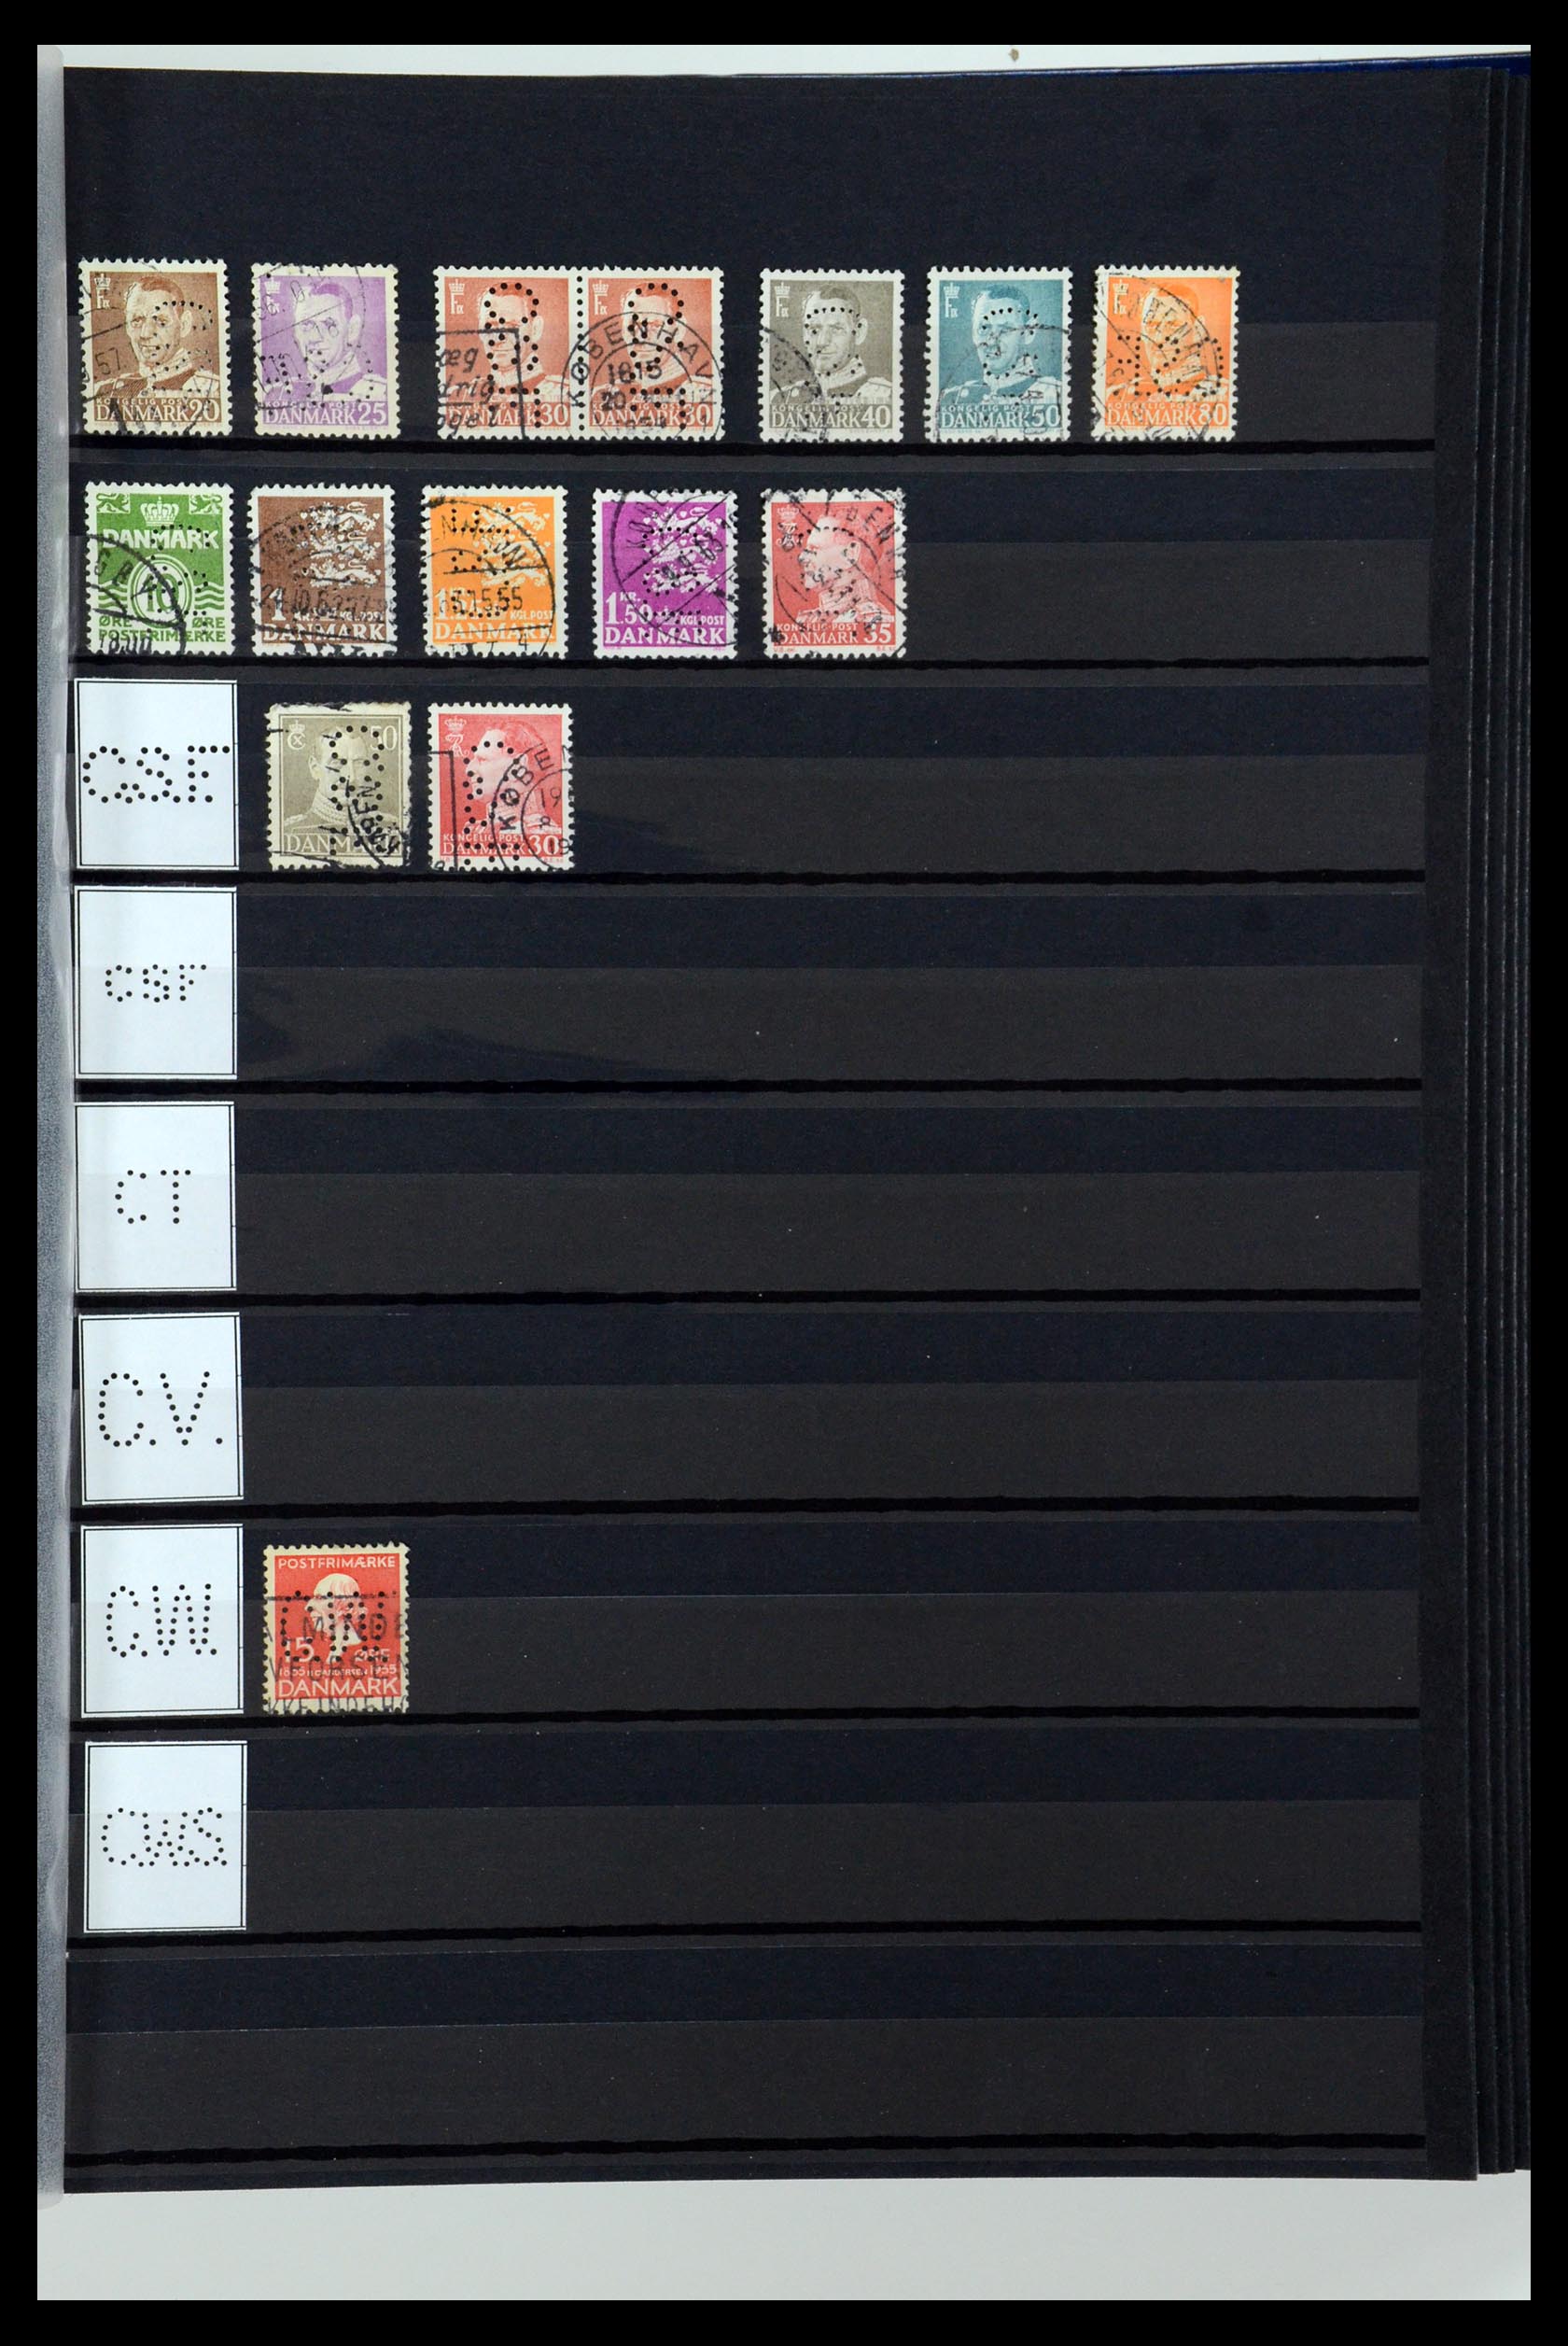 36396 031 - Stamp collection 36396 Denmark perfins.